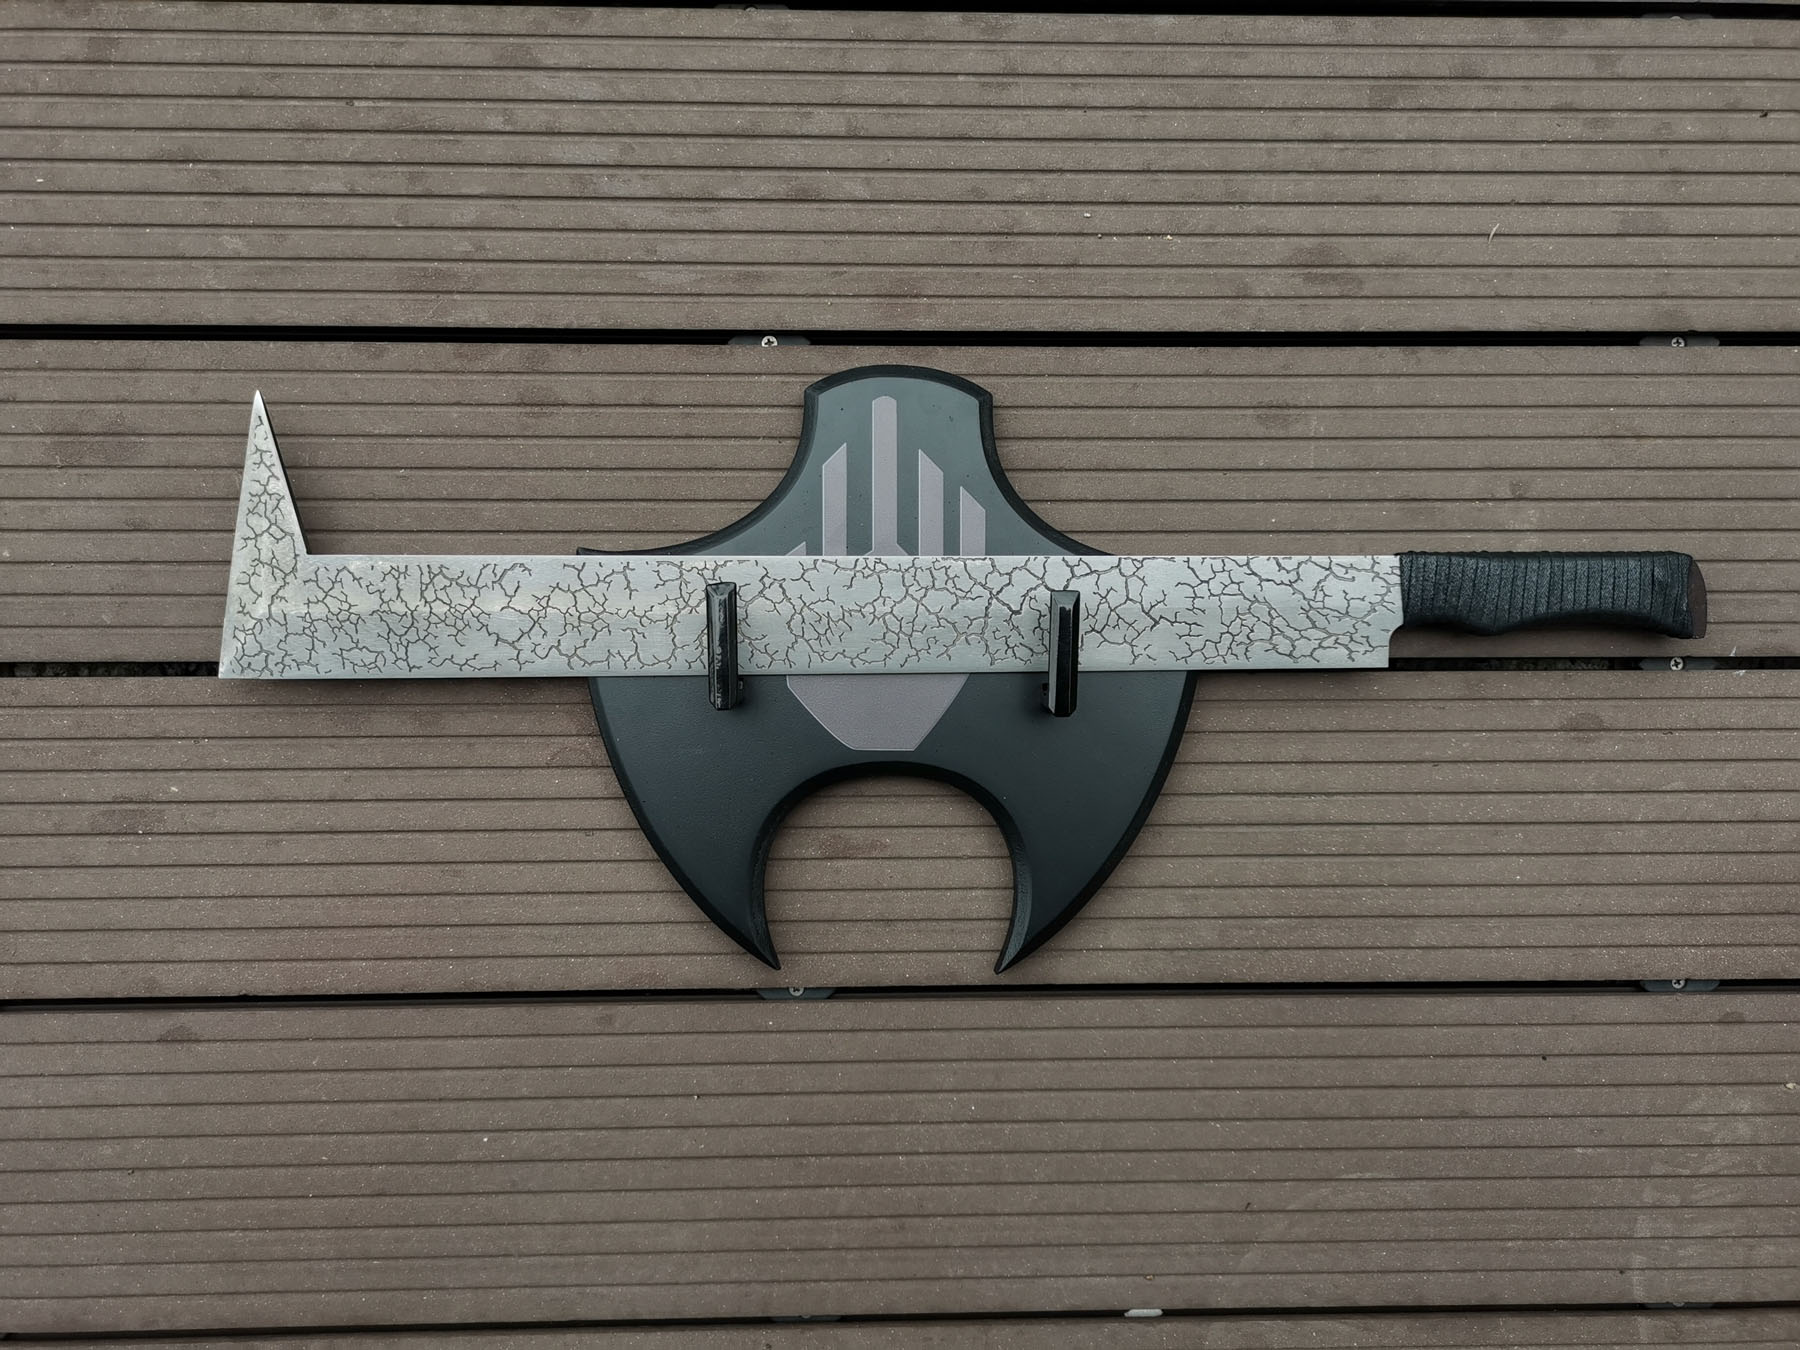 The Lord of Rings - Uruk-hai sword with Sheath